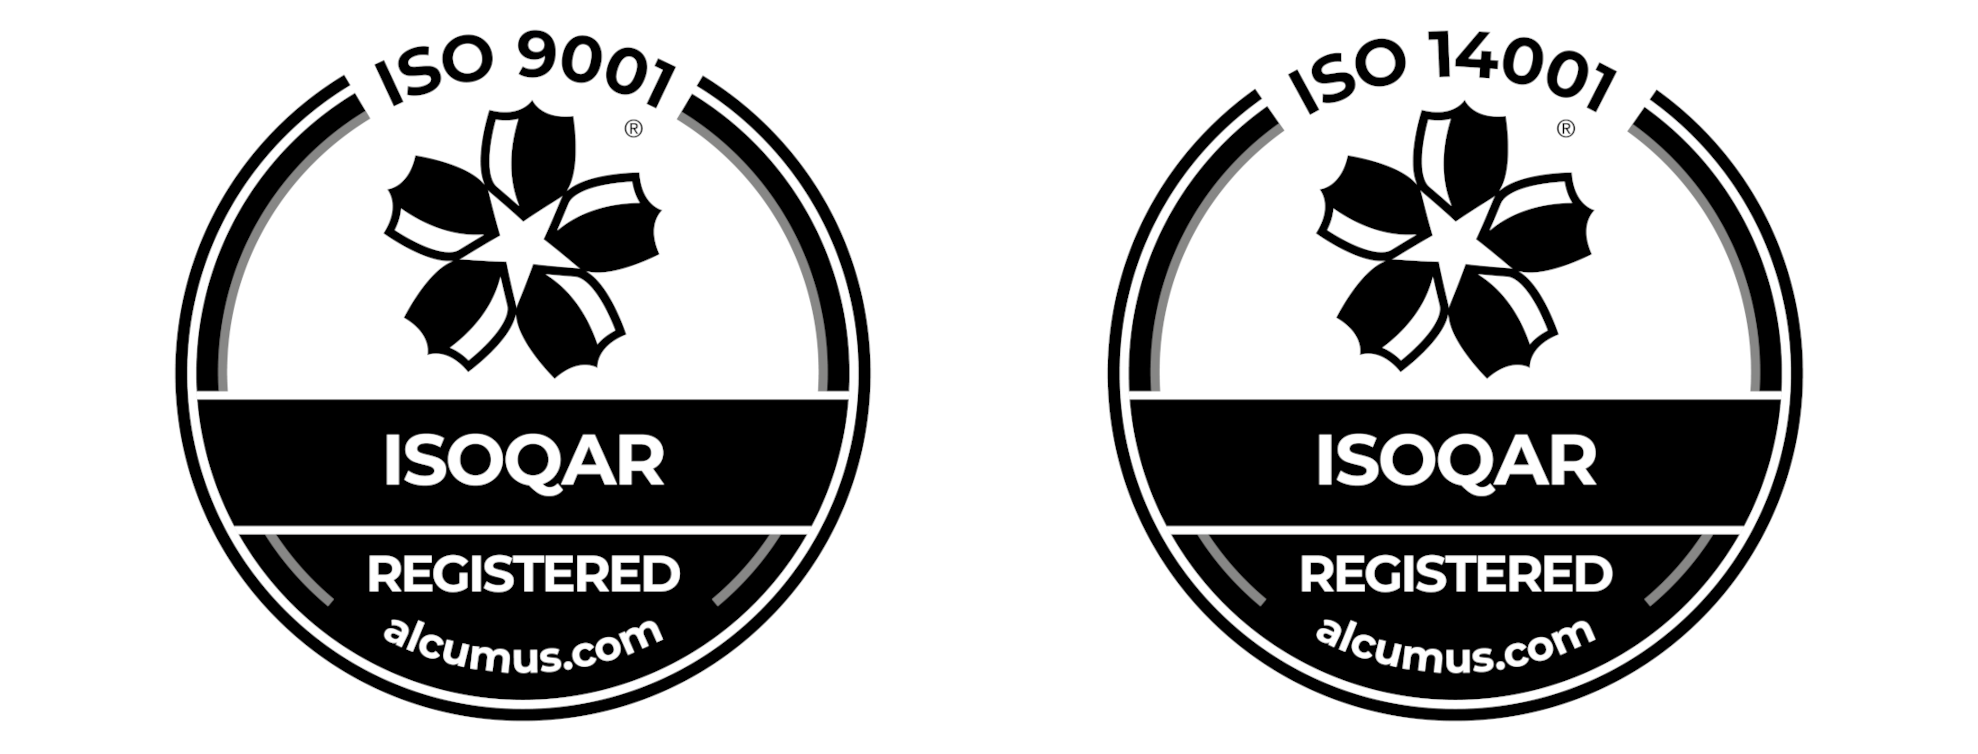 Silvalea Certification - ISO9001 / ISO14001